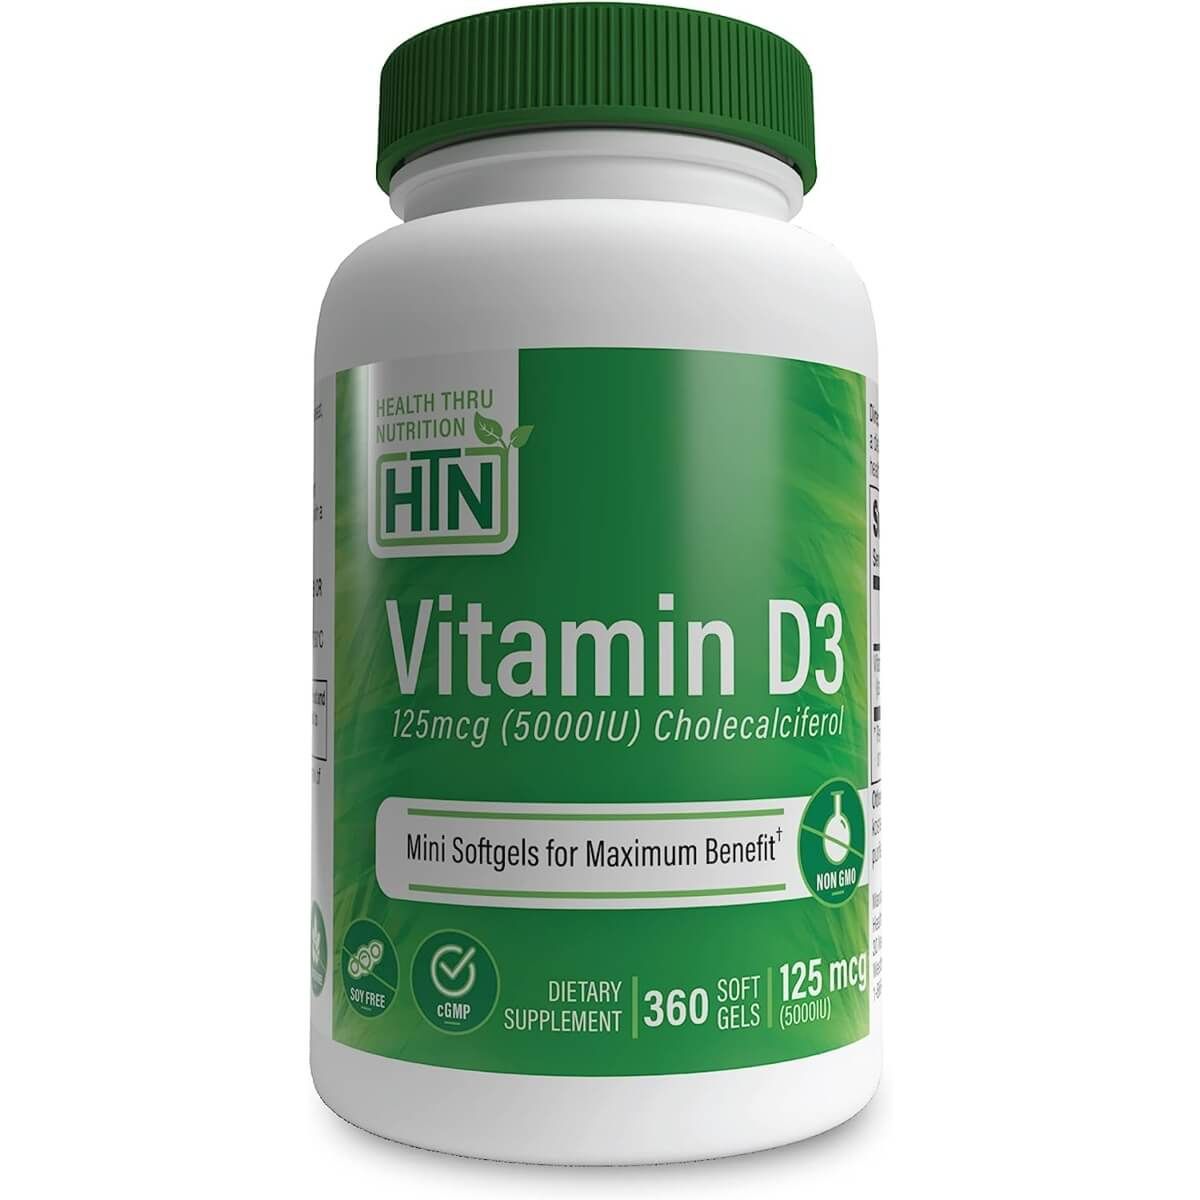 Photos - Vitamins & Minerals Health Thru Nutrition Vitamin D3 5,000iu  360 Softgels PBW-P41861(125mcg)